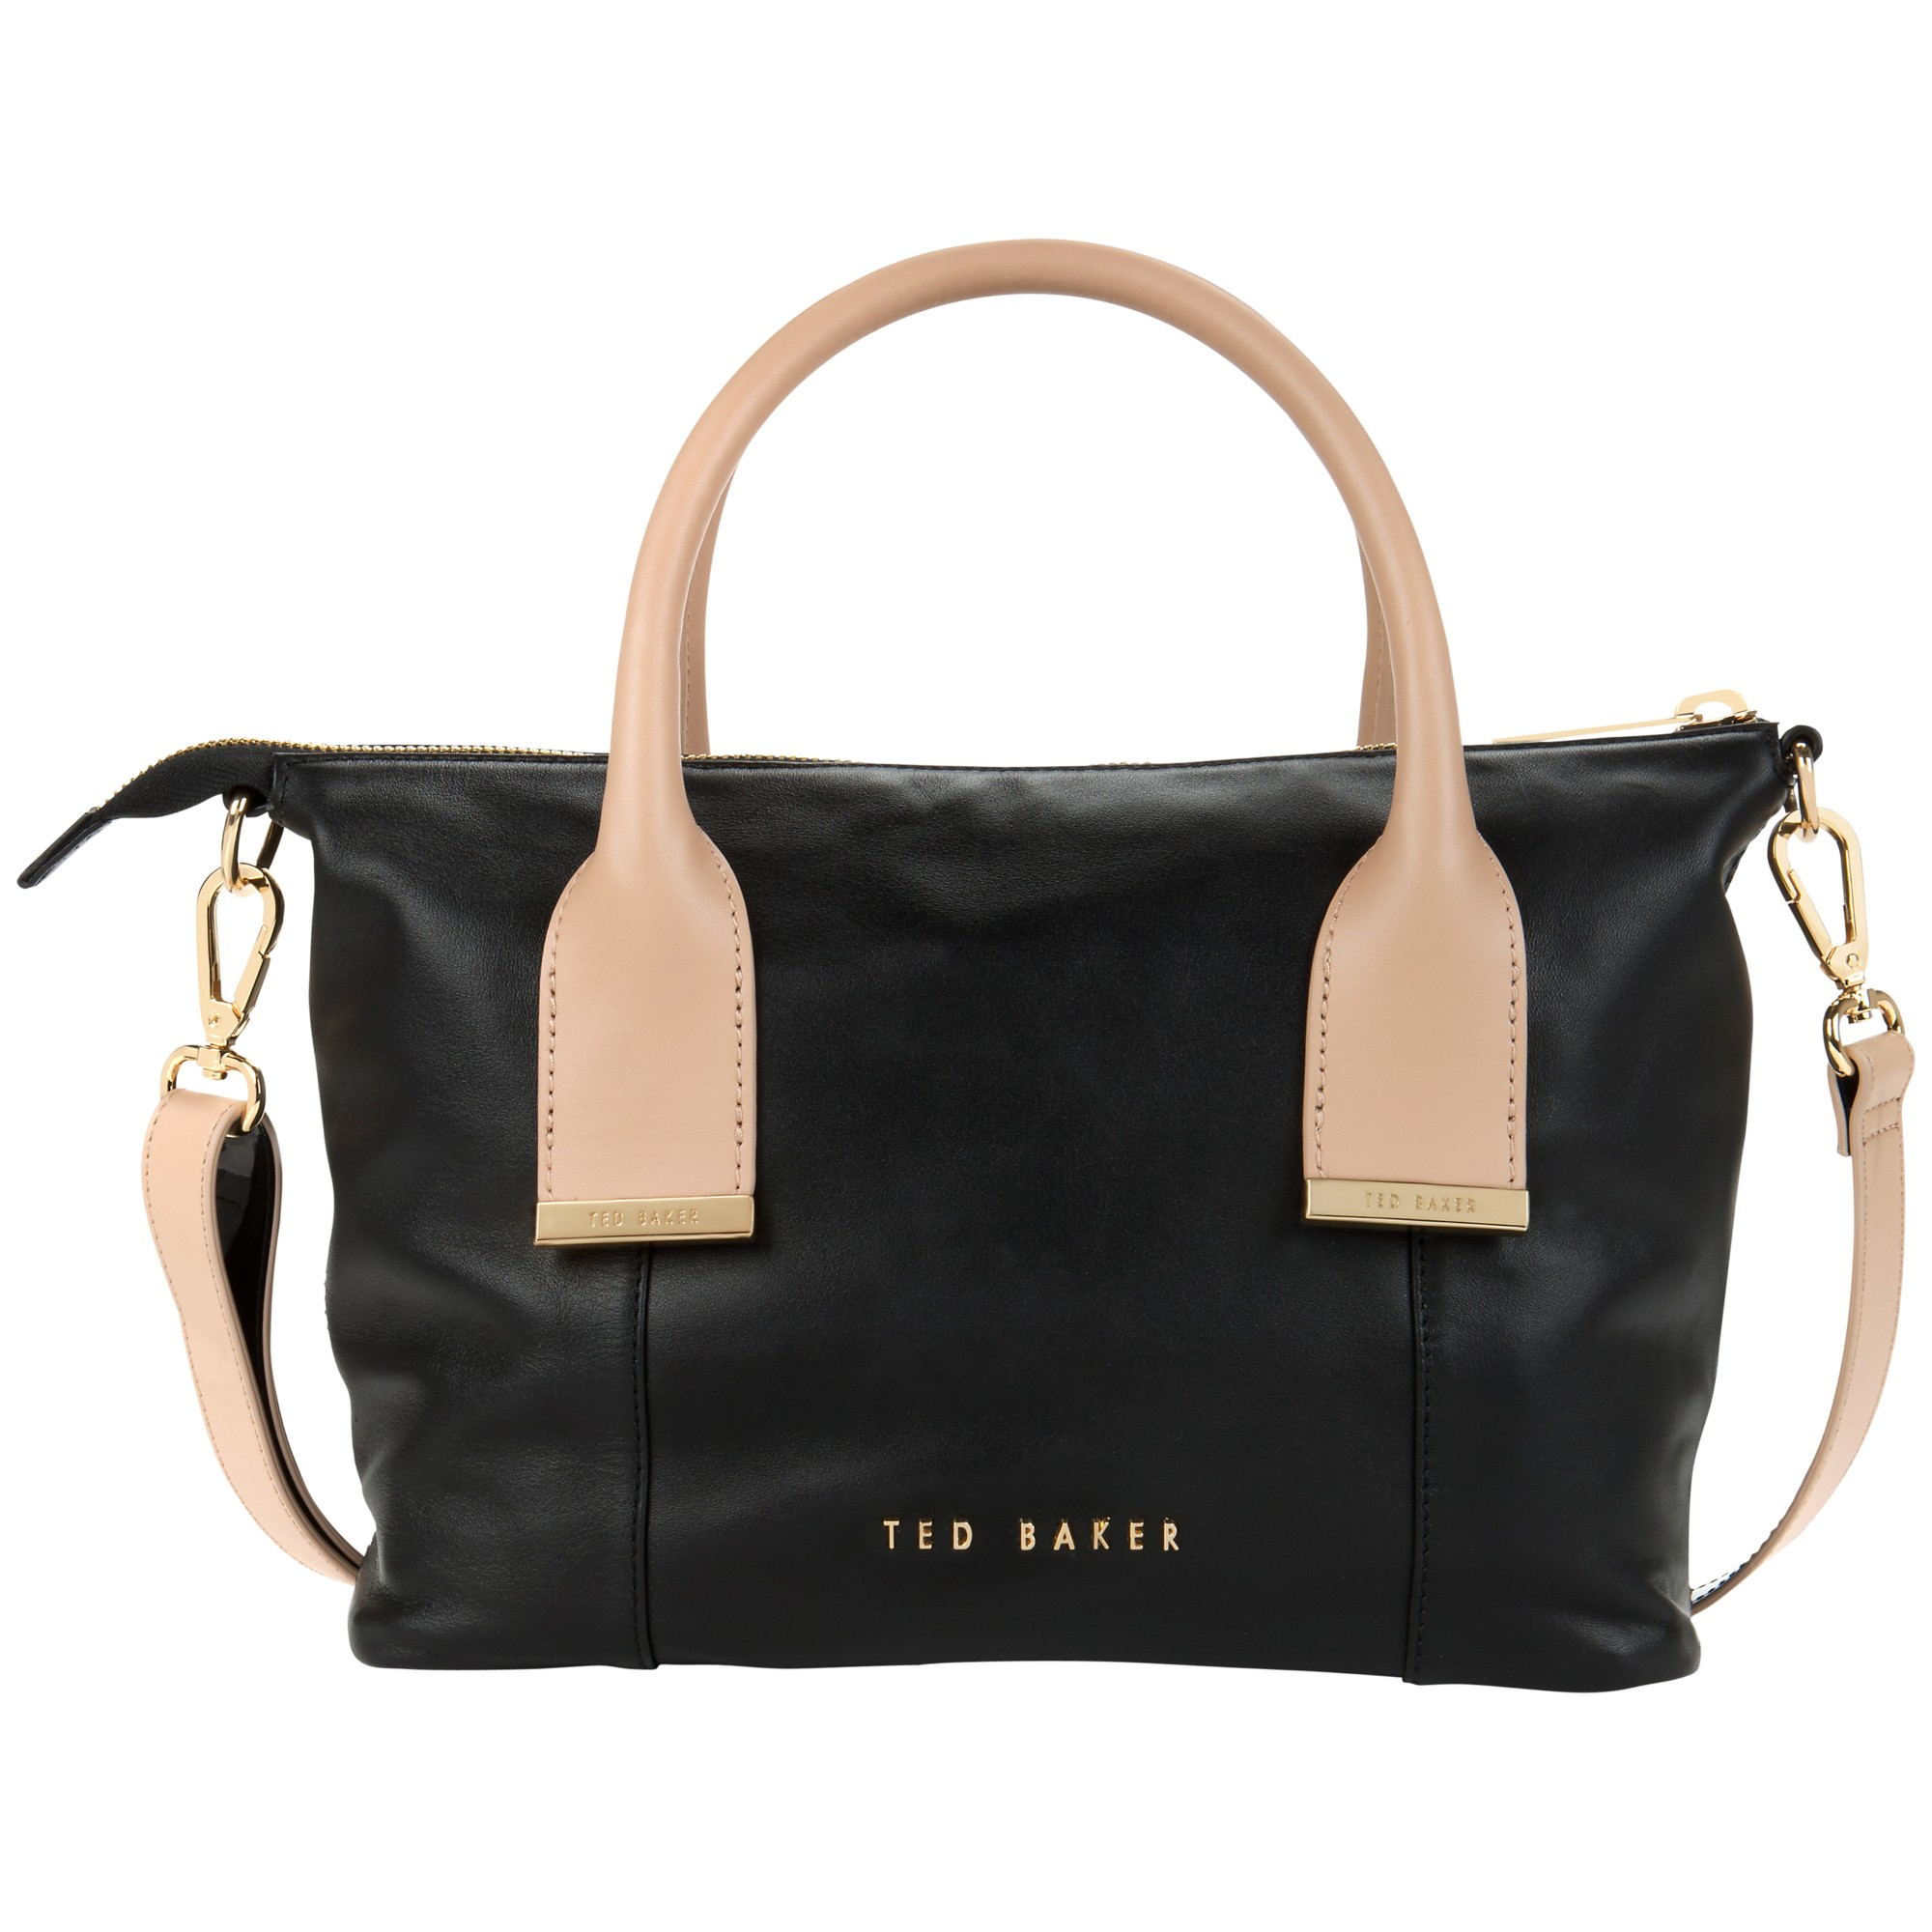 Ted Baker Amelia Leather Mini Tote Bag in Tan (Black) - Lyst